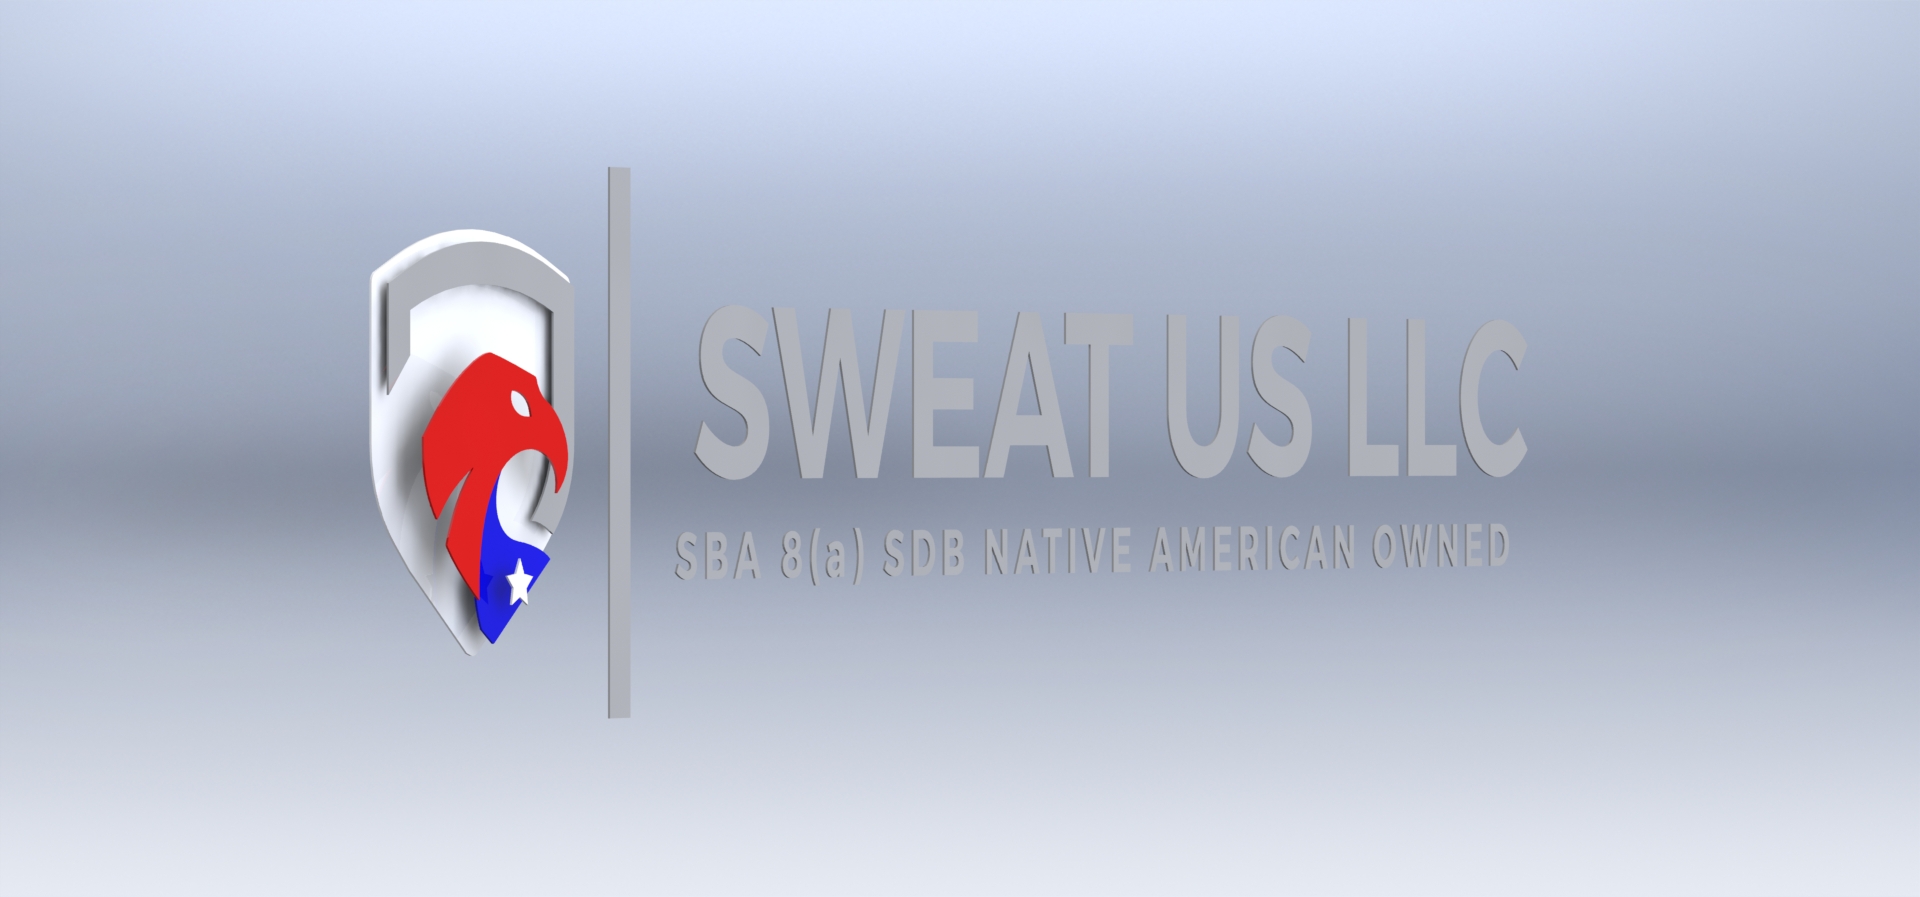 p2 - left - Sweat US LLC.JPG